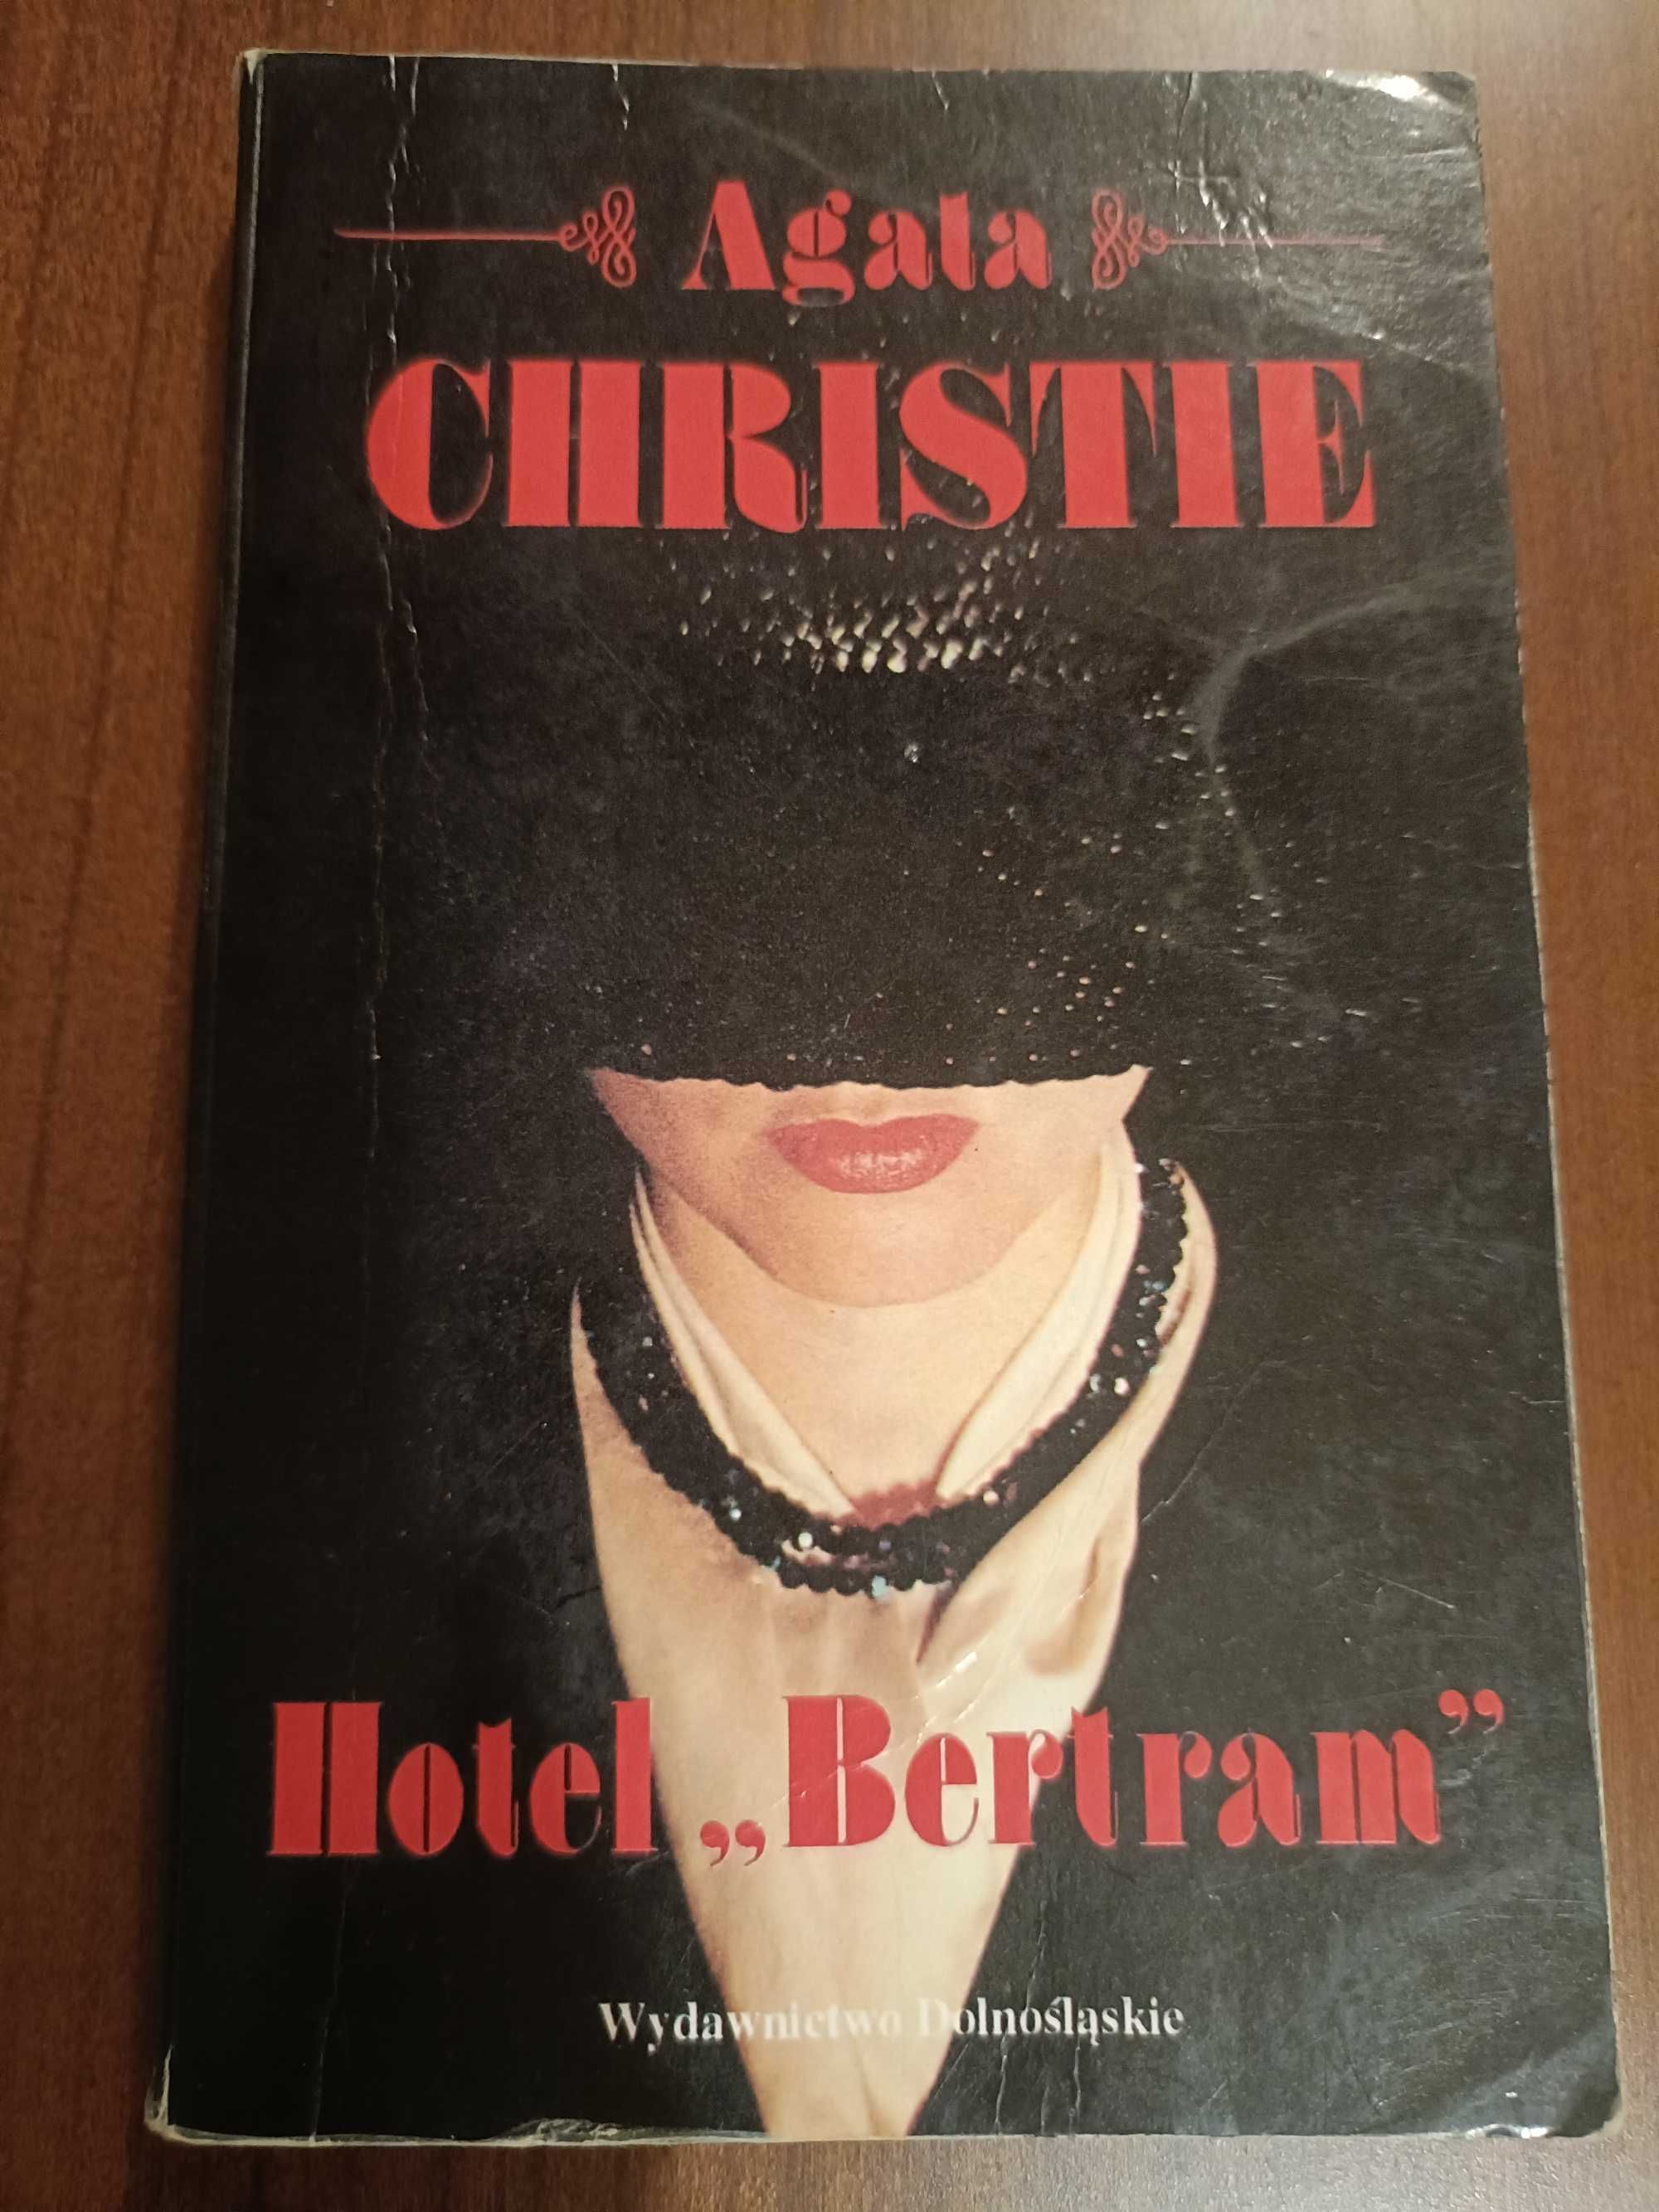 Hotel "Beltram" - Agata Christie